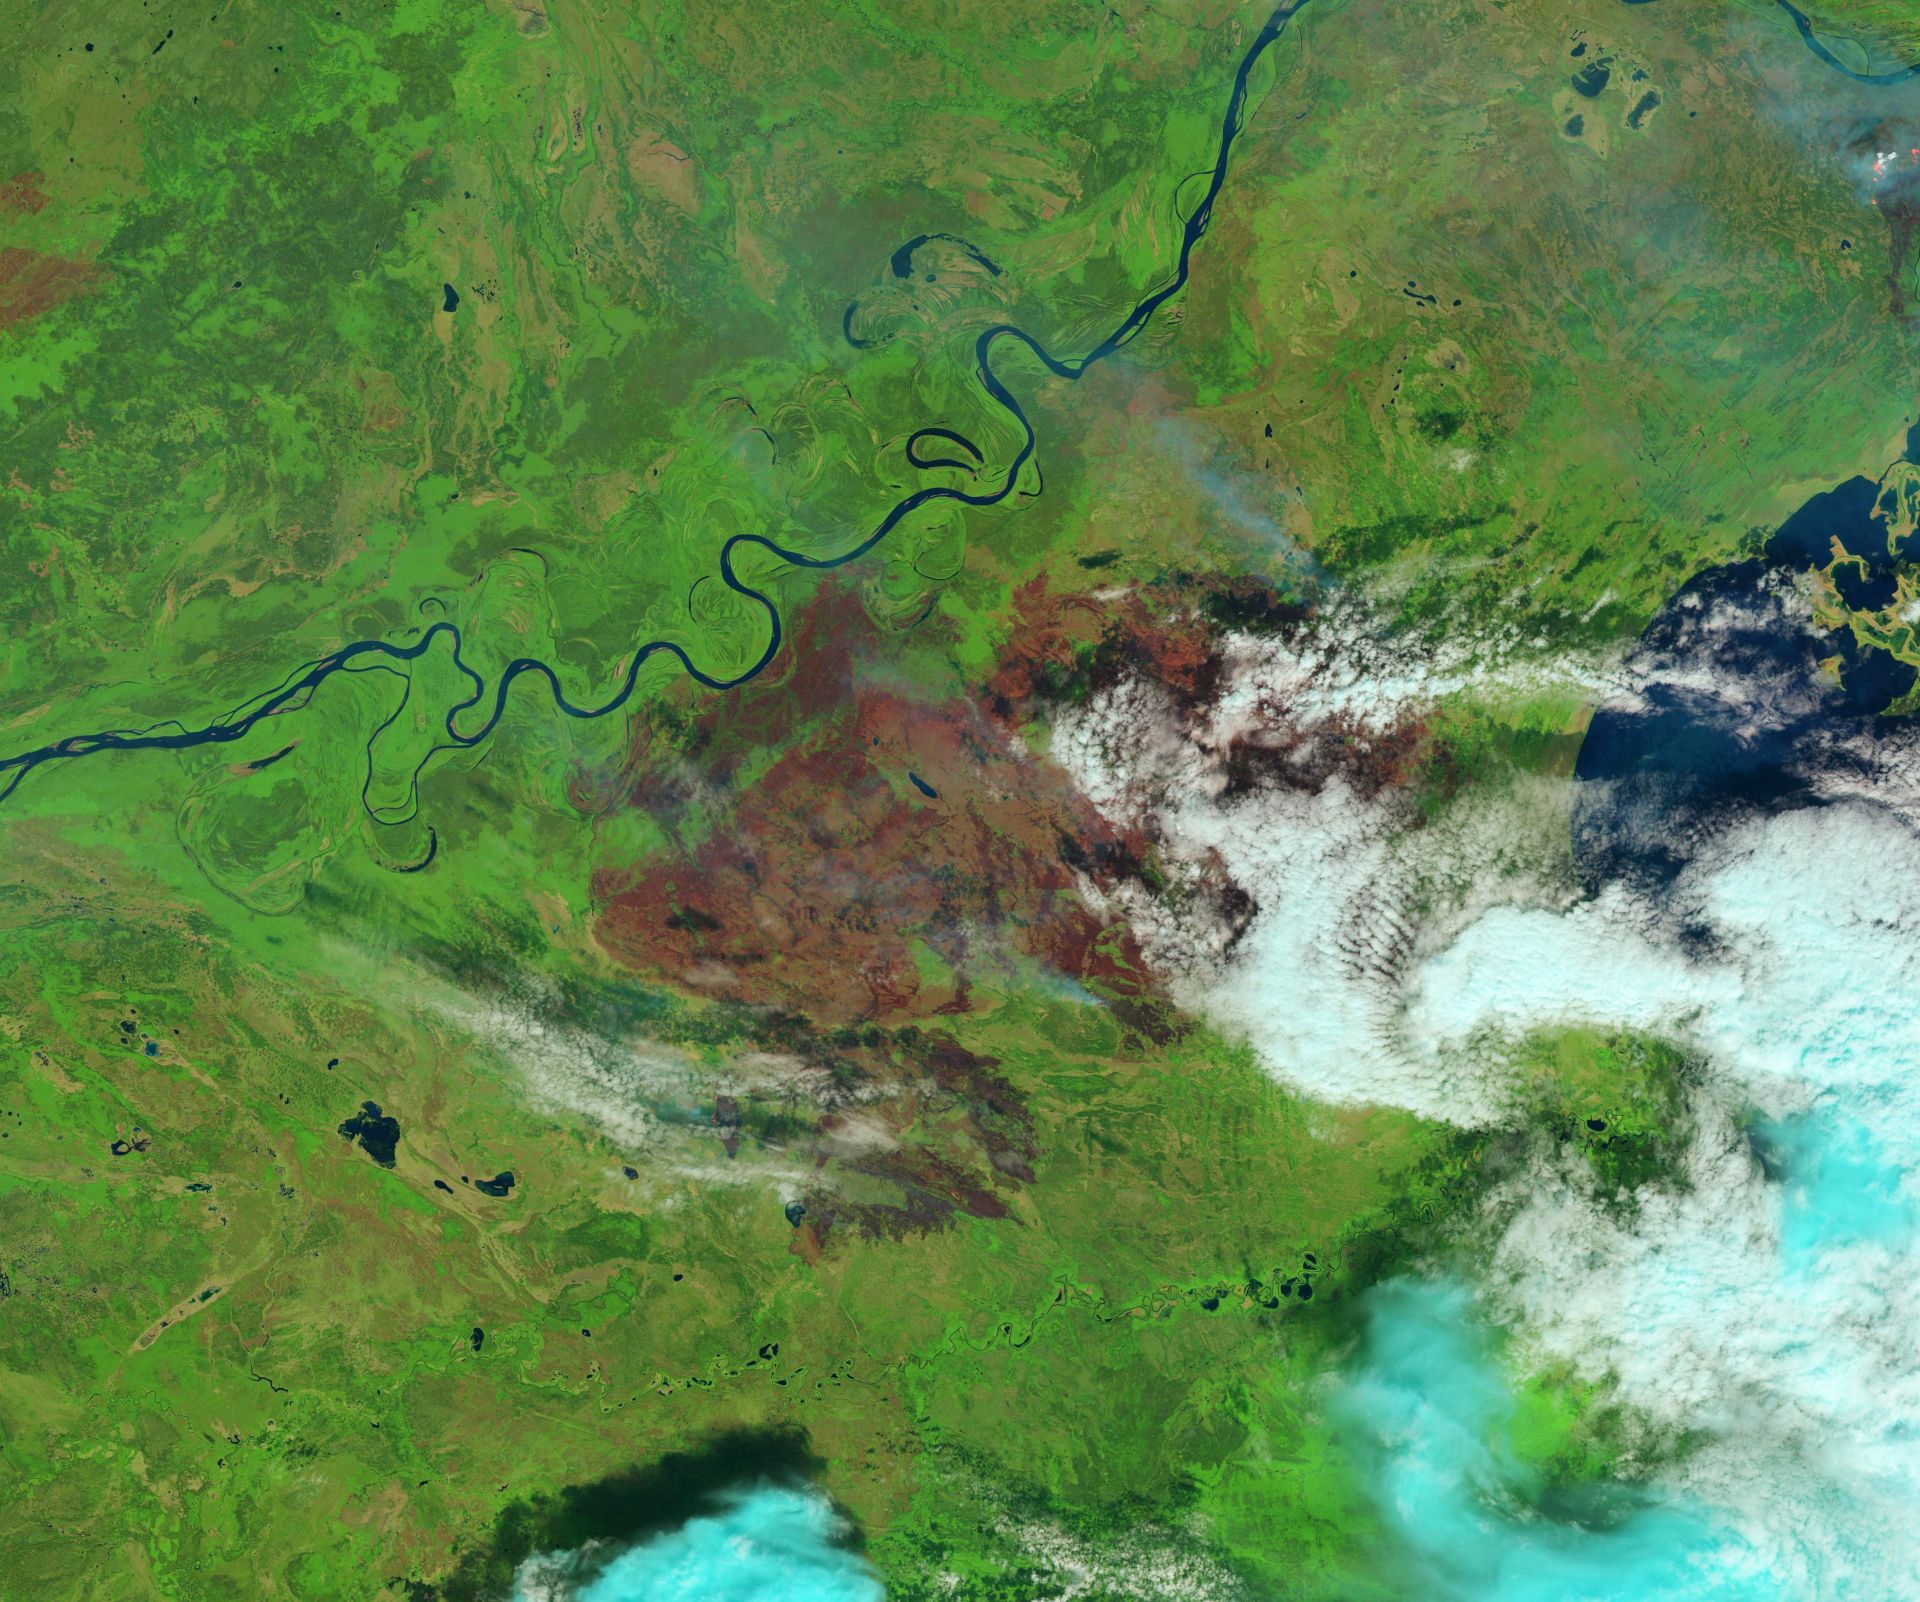 Incendies - Feux - Fire - Canada - Alberta - Saskatchewan- Landsat 8 - OLI - satellites - 26 Juin 2015 - USGS